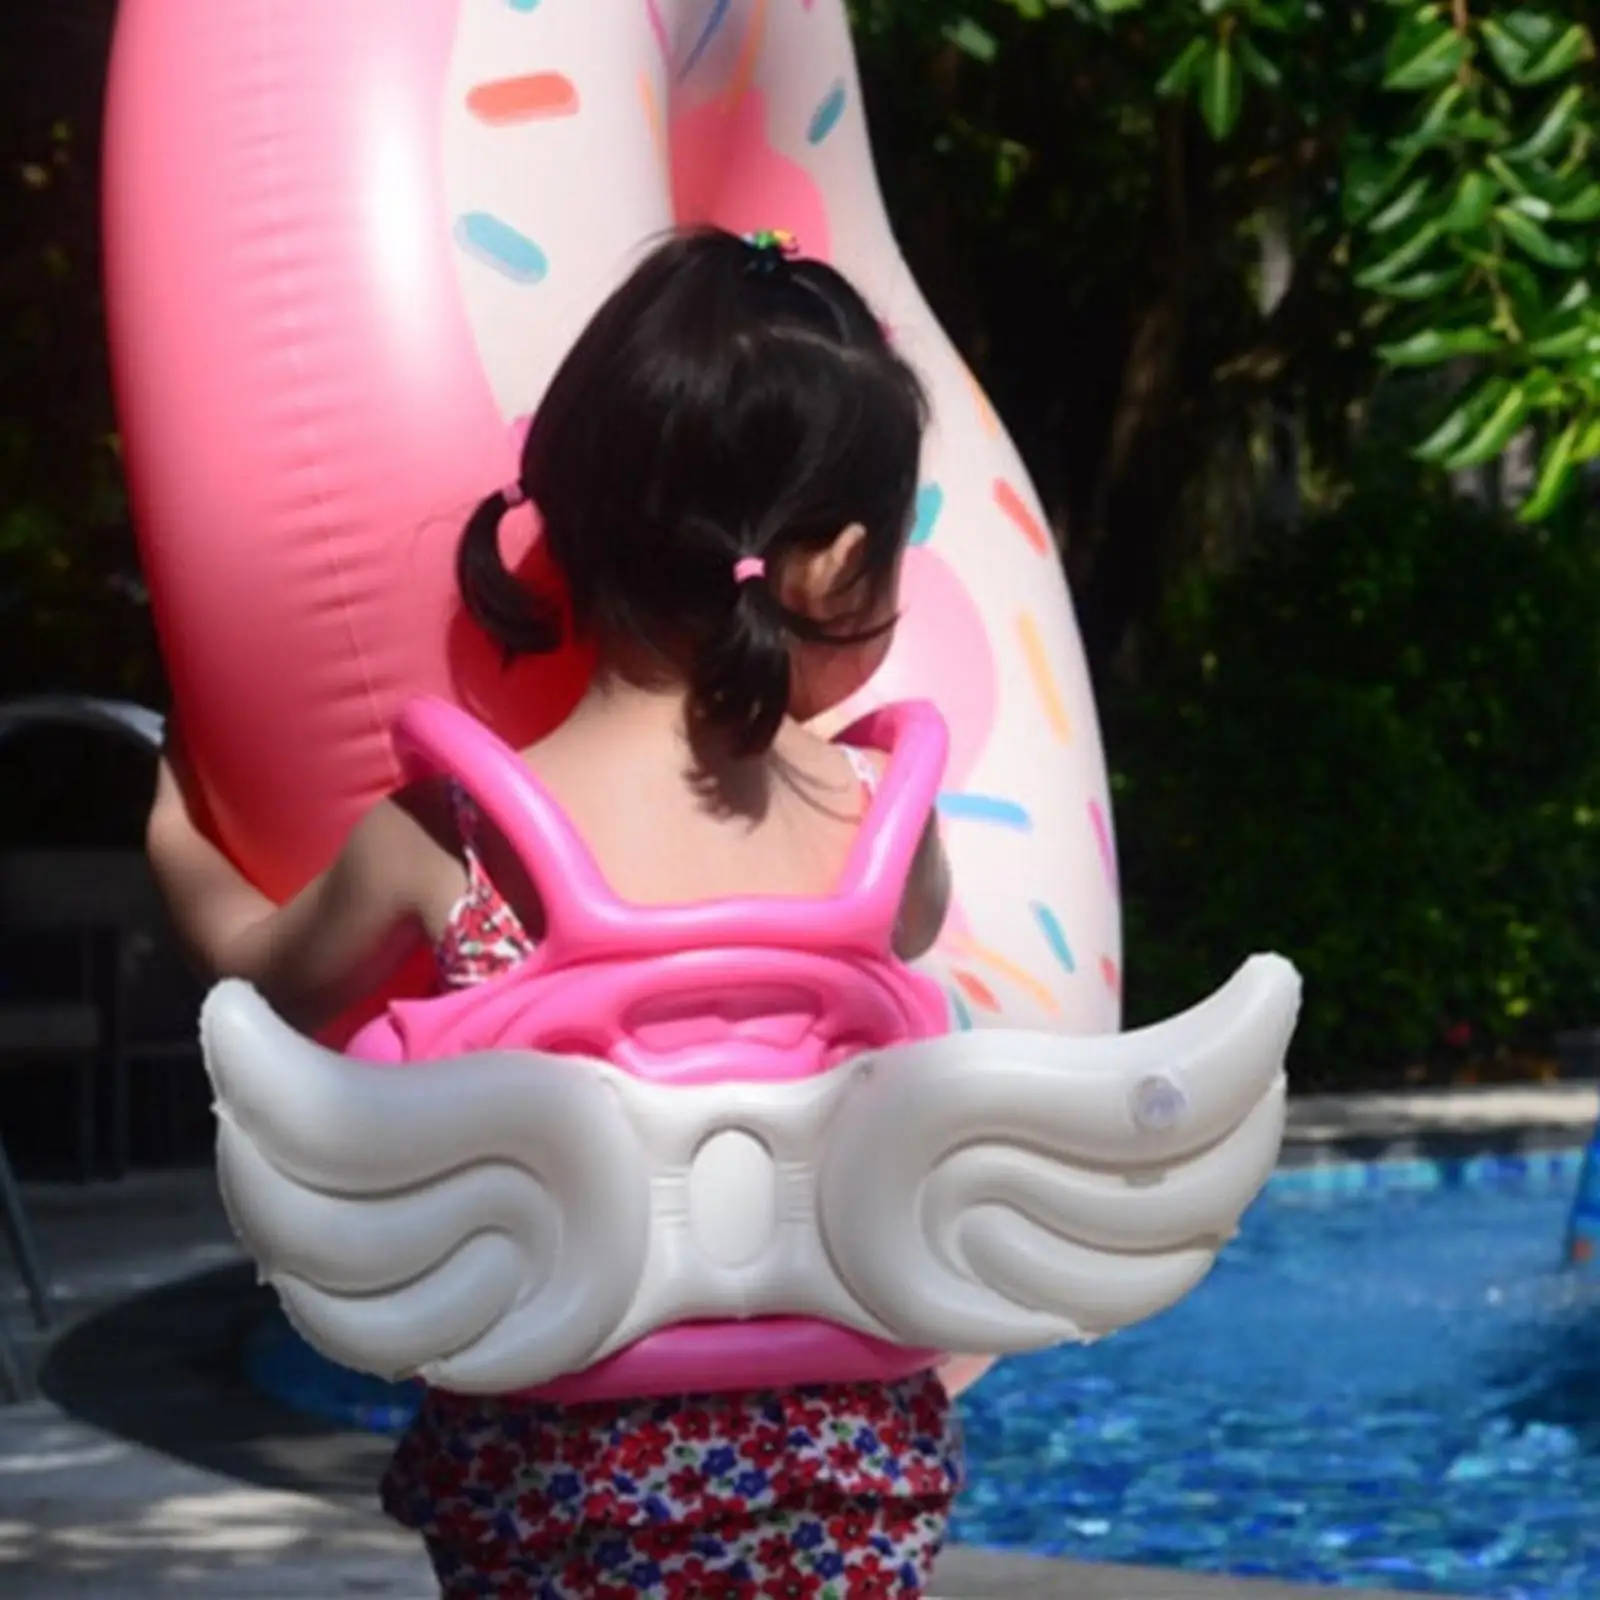 Kids Pool Floats Inflatable Life Vest Boys Girls Floaters Swim Ring Buoyancy